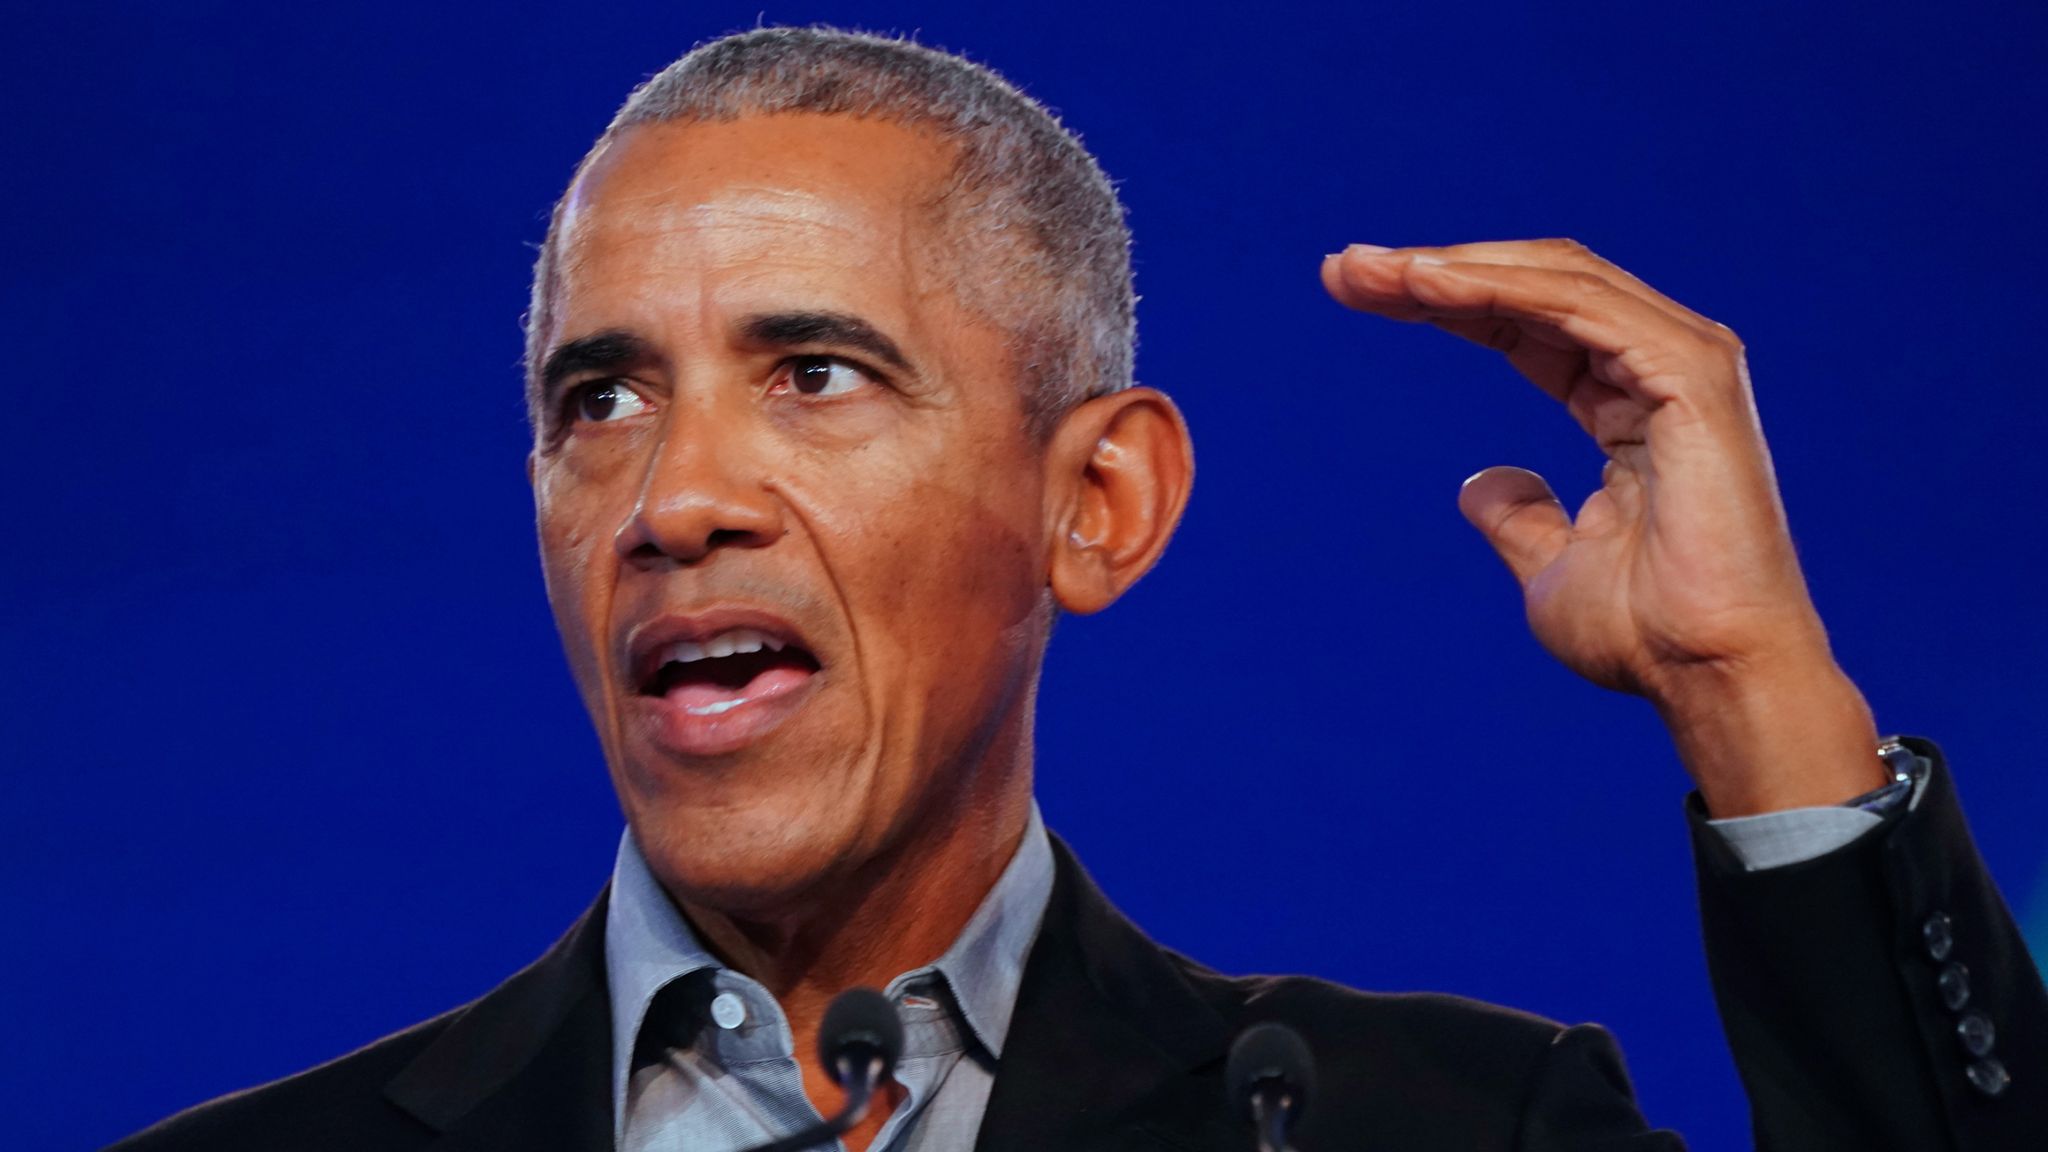 COP26 Barack Obama says world 'still falling short' on fighting